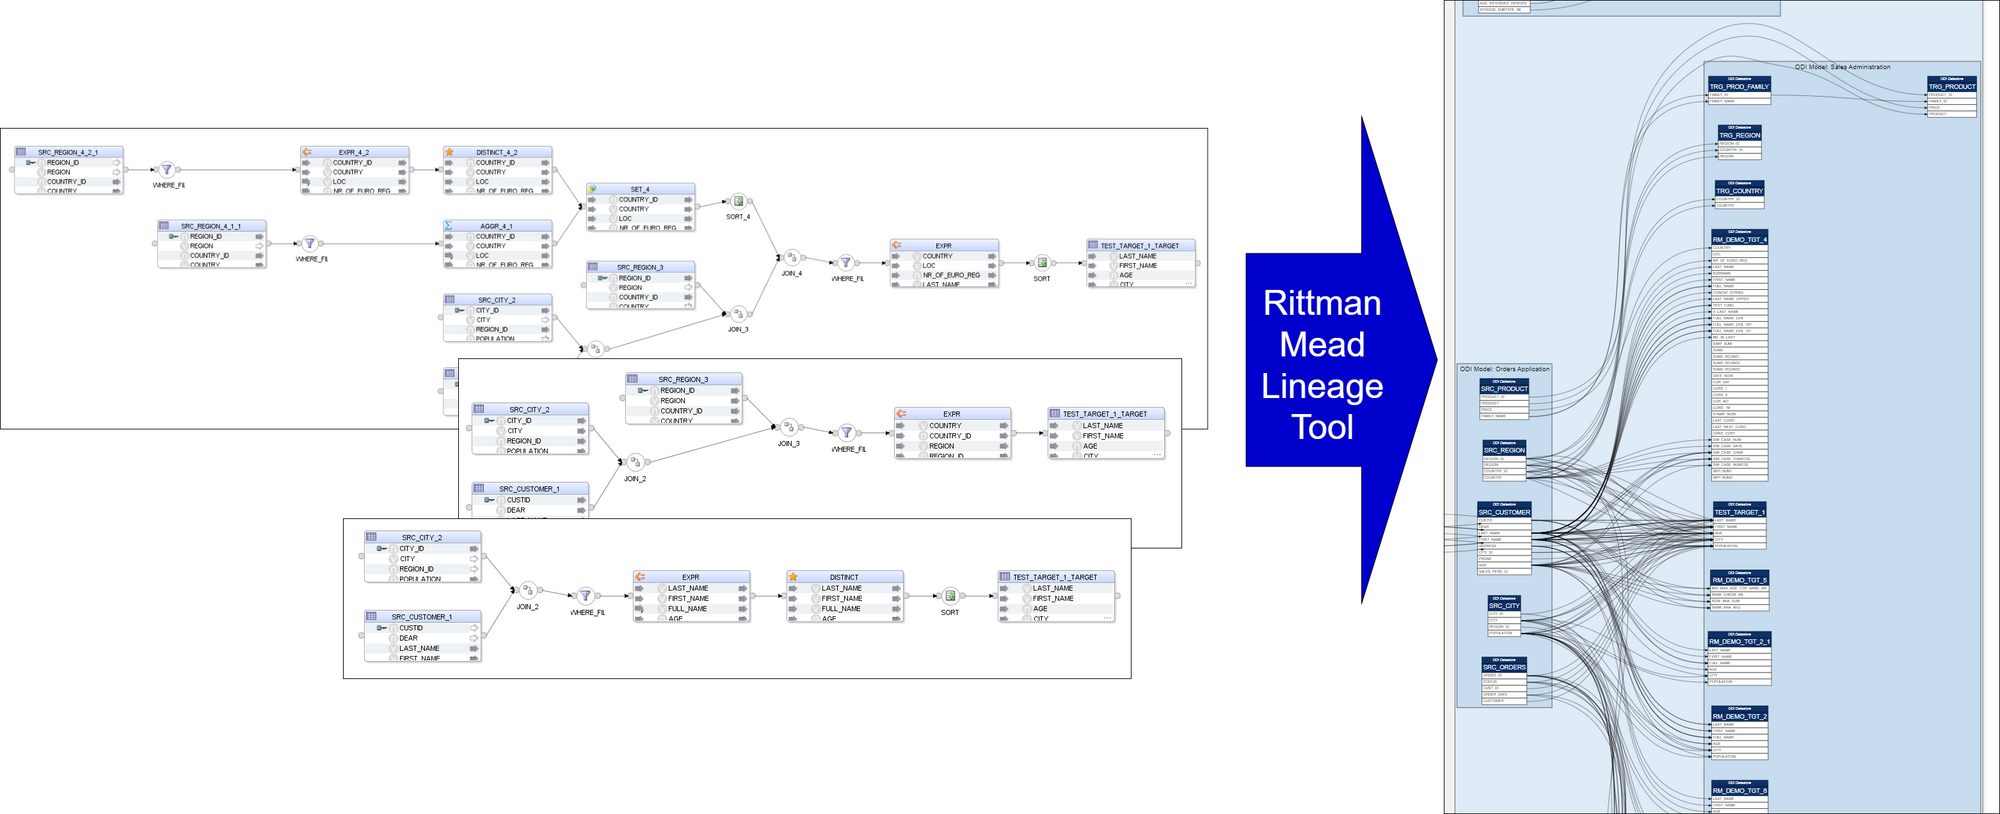 Introducing Rittman Mead Lineage Tool